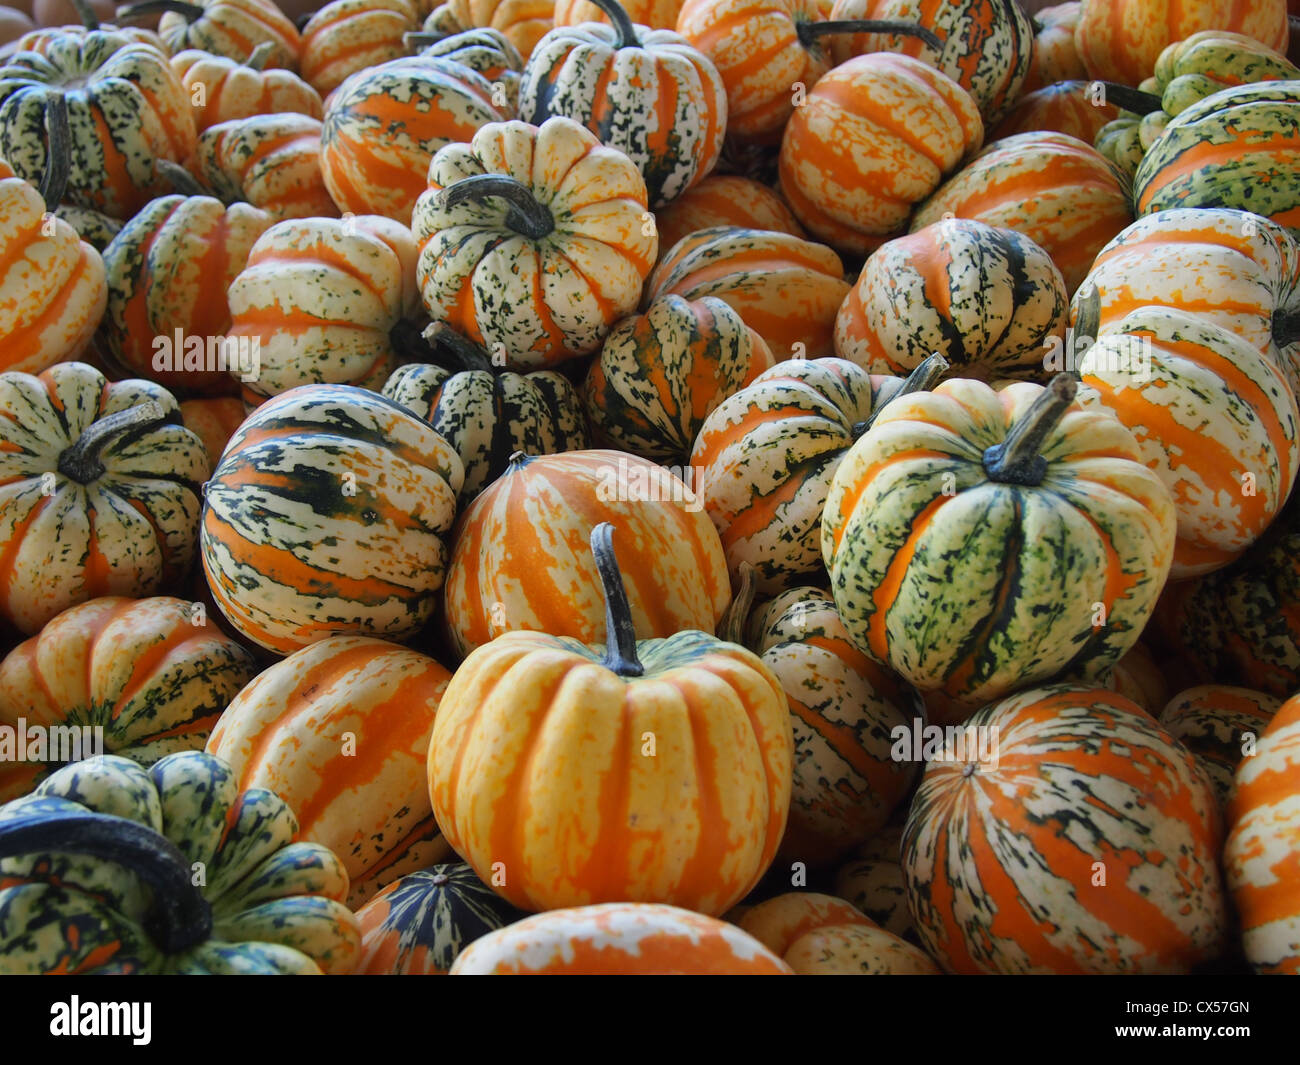 Green, white and orange pumpkins Stock Photo